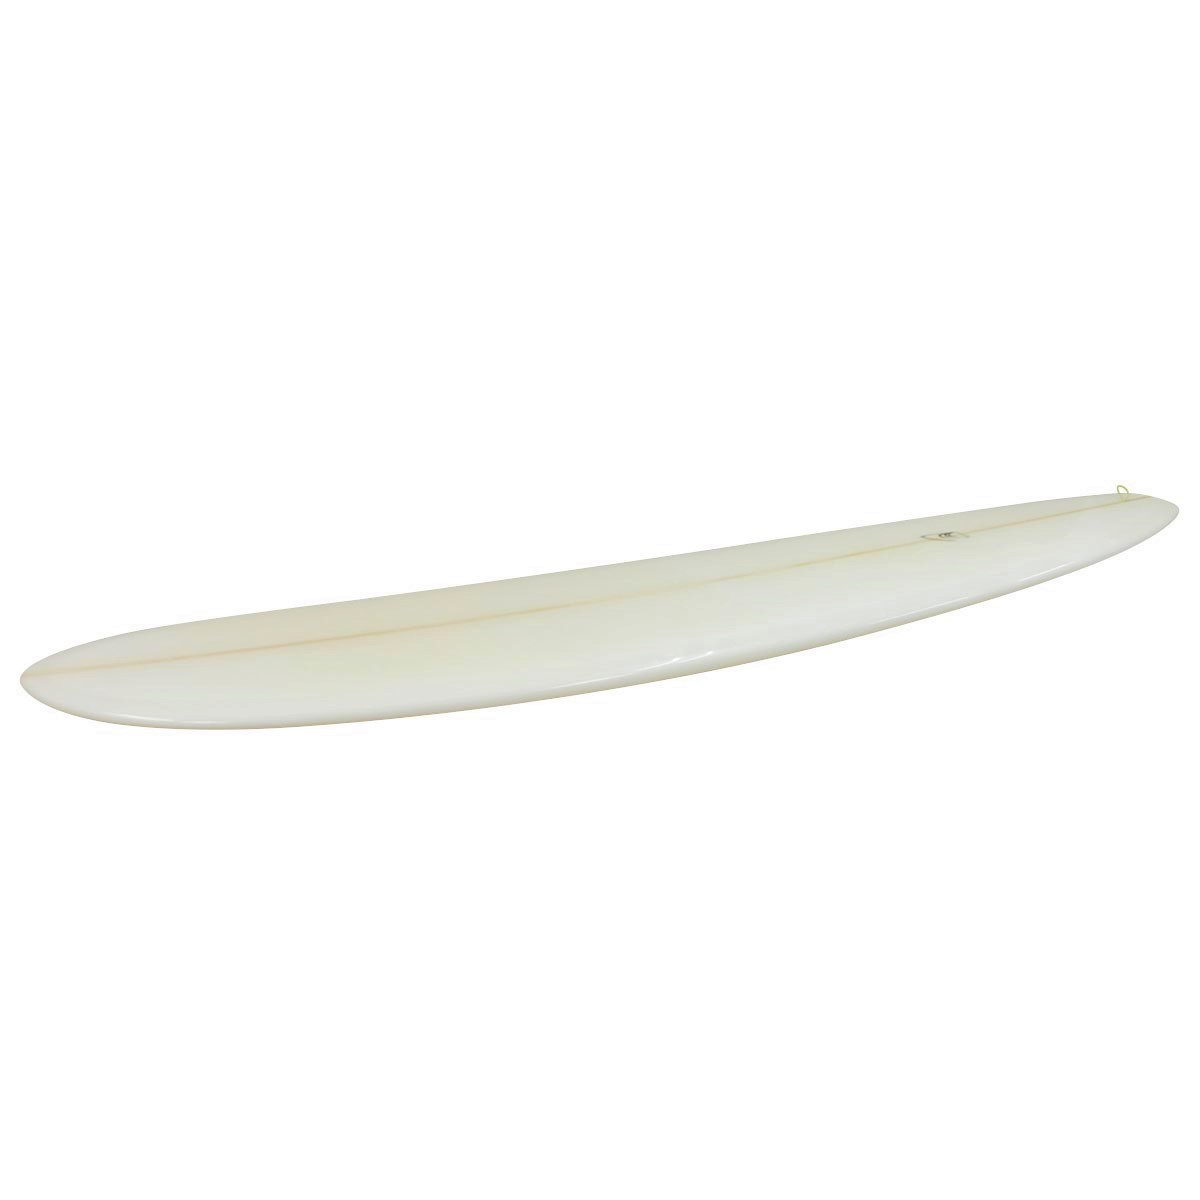 Yoshimi Takada Surfboards / Custom Diamond Tail 9`4